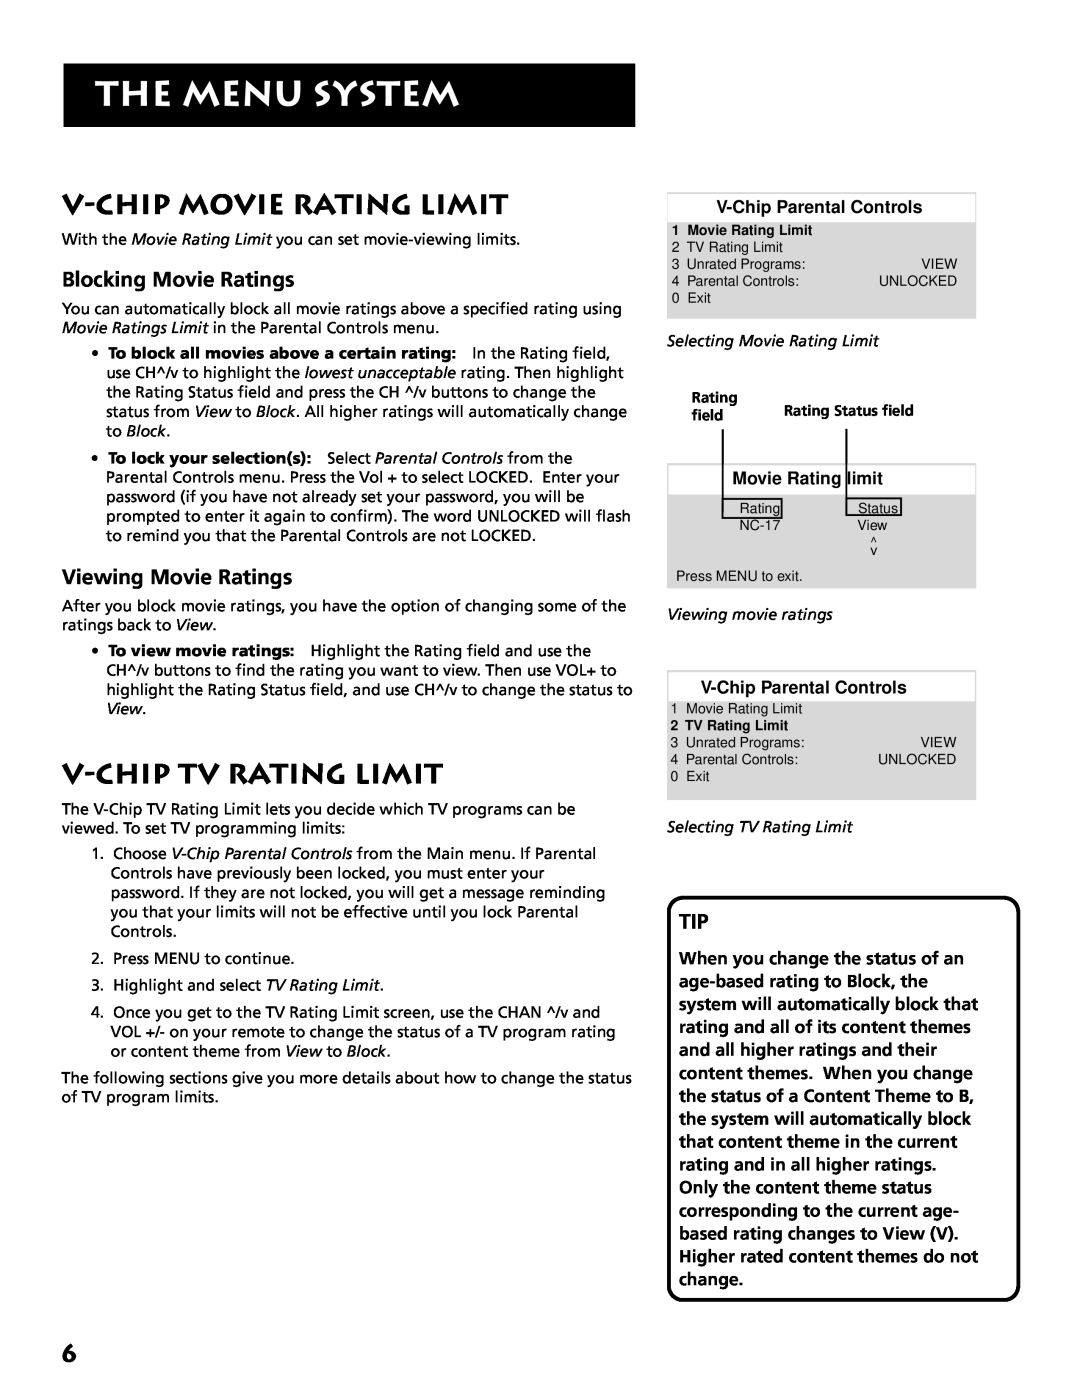 RCA E13318 manual V-Chip Movie Rating Limit, V-Chip Tv Rating Limit, Blocking Movie Ratings, Viewing Movie Ratings 